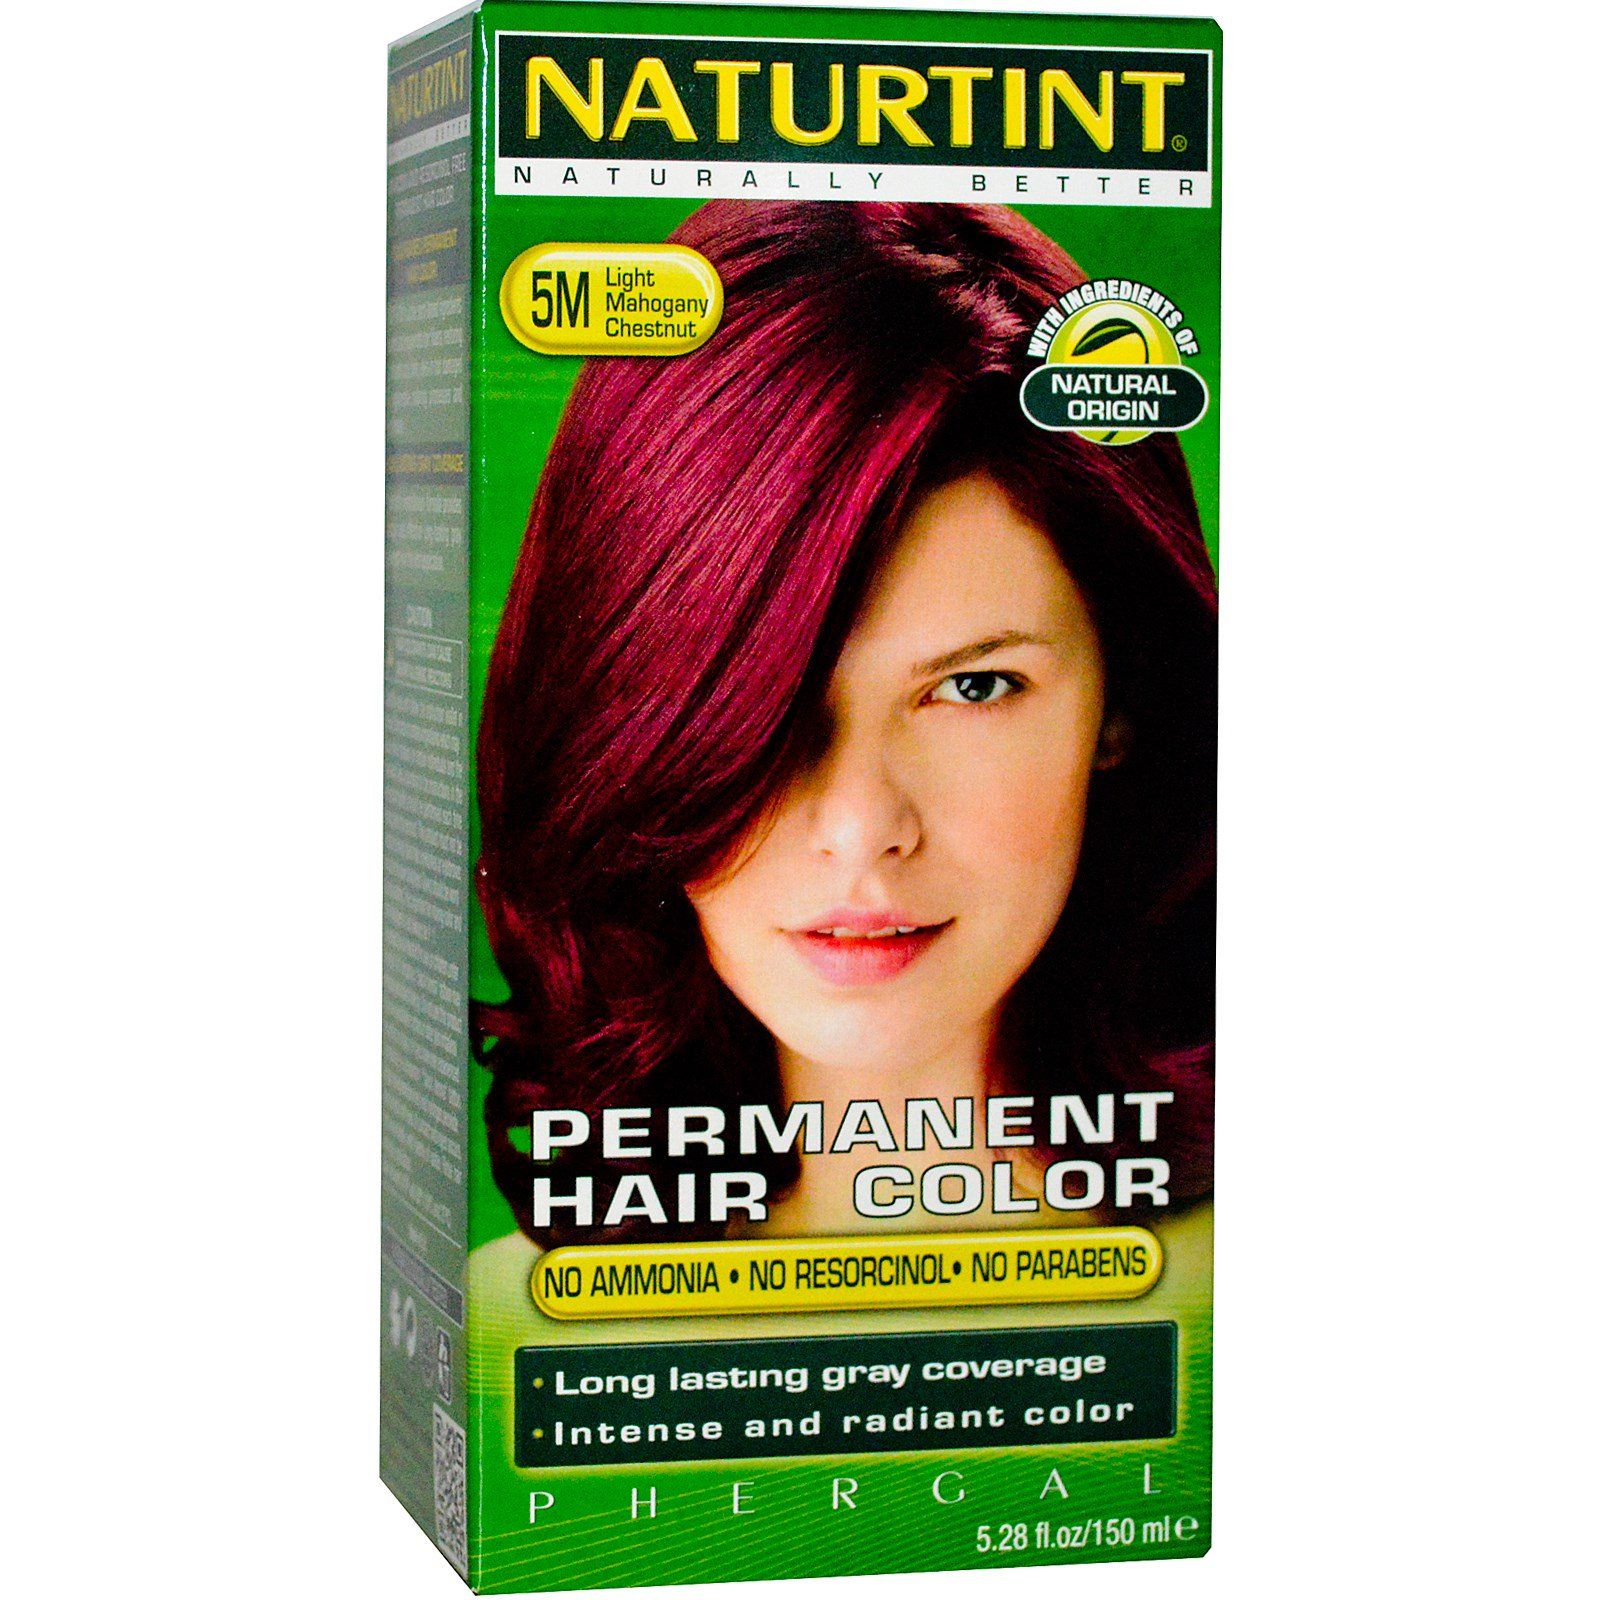 Naturtint Стойкая краска для волос 5M светлый махагони-каштан 5,28 жидких унций (150 мл) стойкая краска для волос 4n натуральный каштан 155мл naturtint